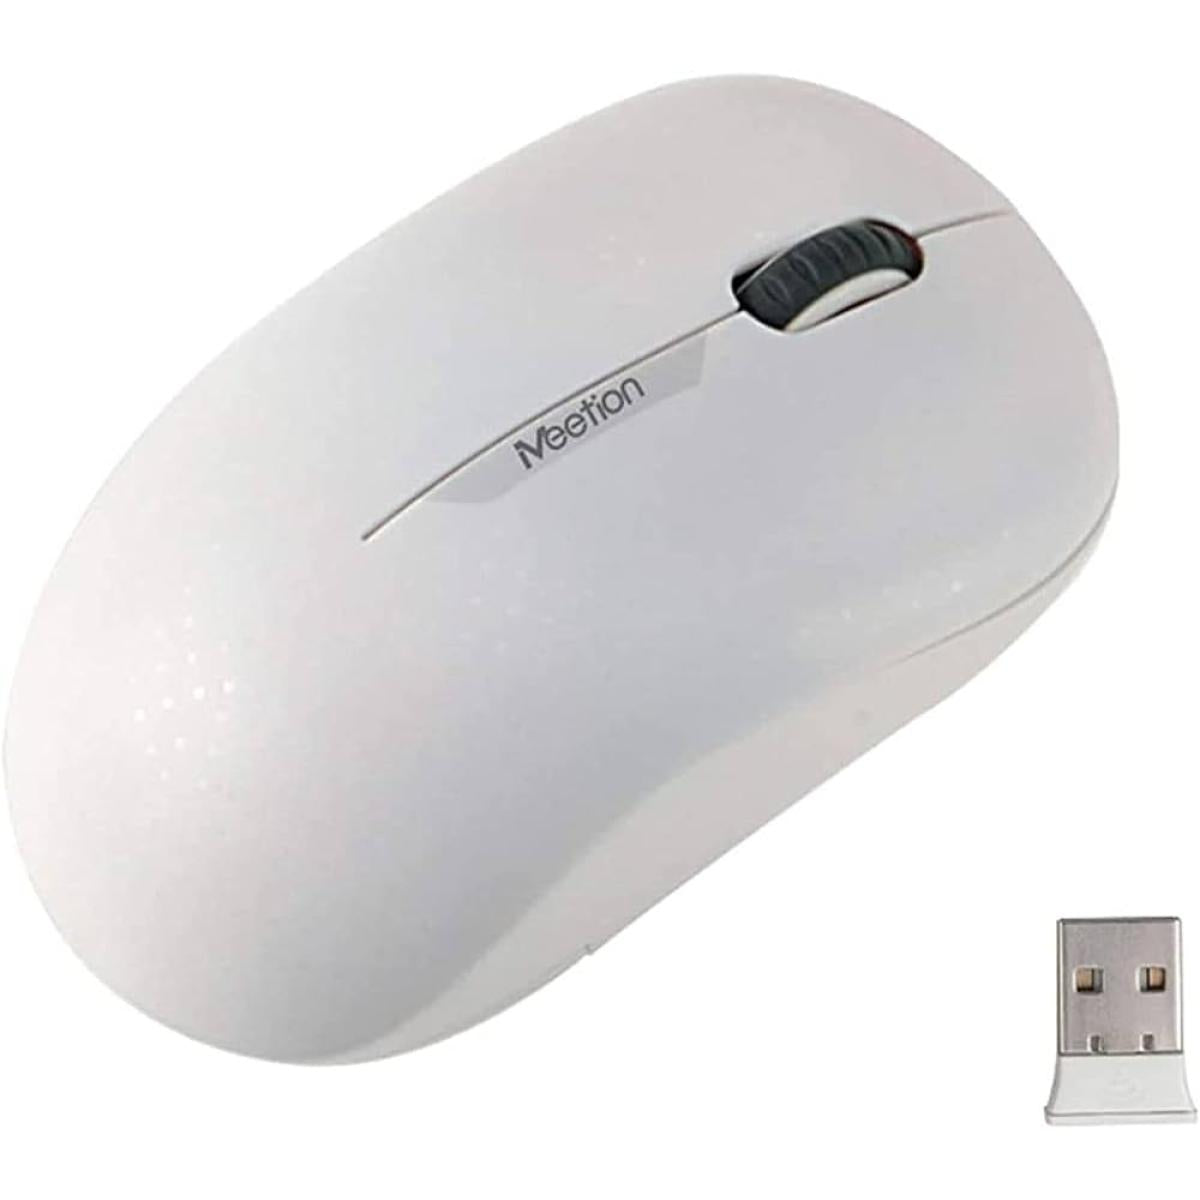 MeeTion Cordless Optical Usb Computer 2.4GHz Wireless Mouse - White